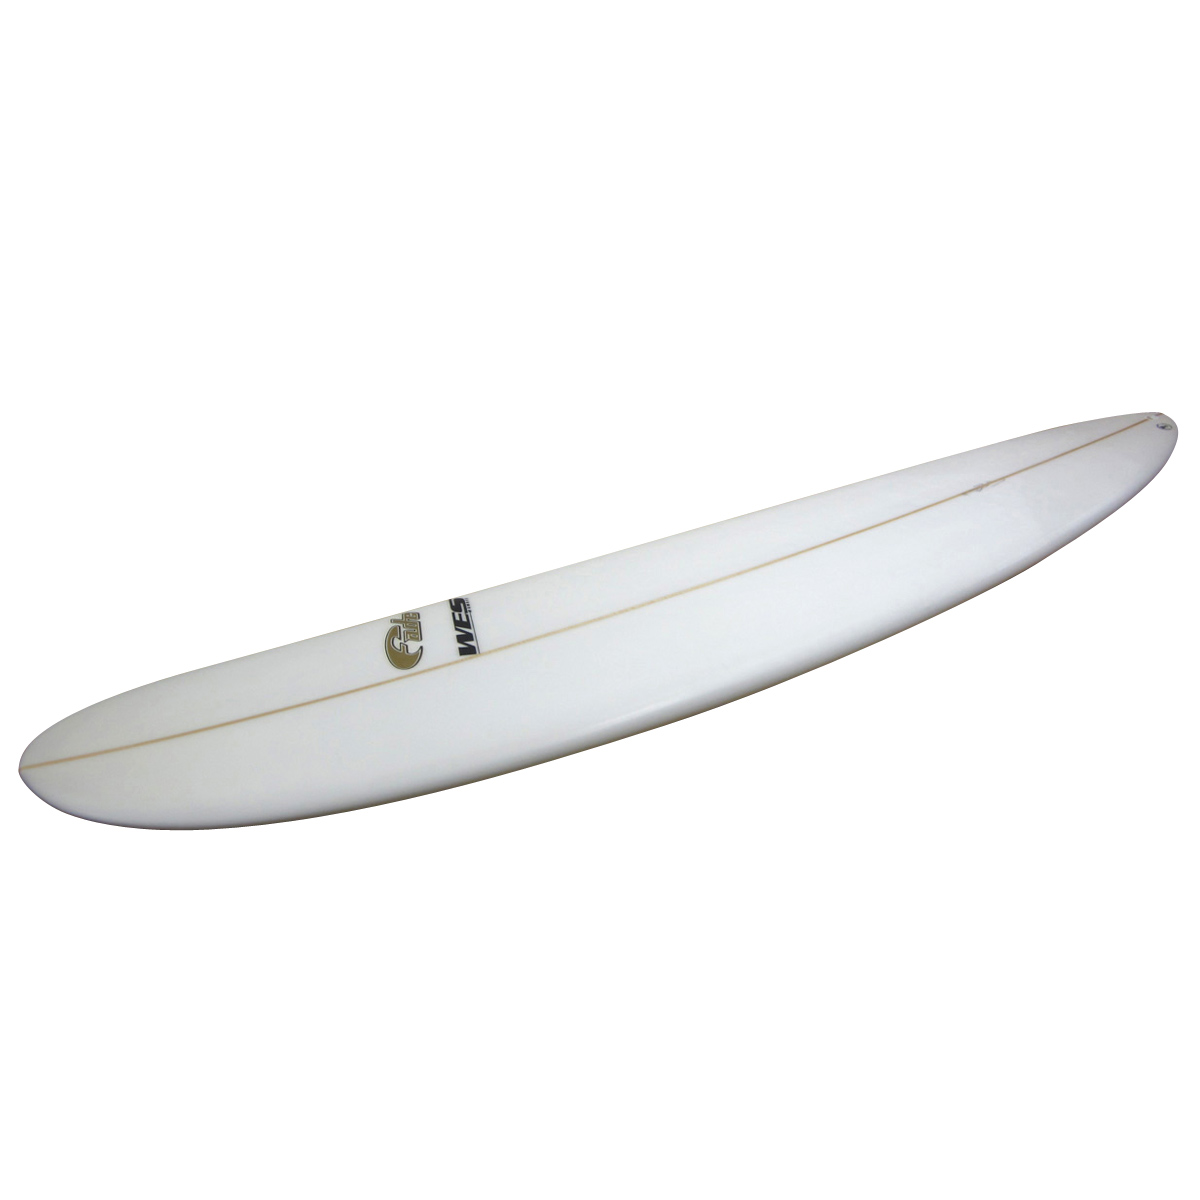 FADE Surfboards / 9`0 Custom Shaped By Wes Oshiro